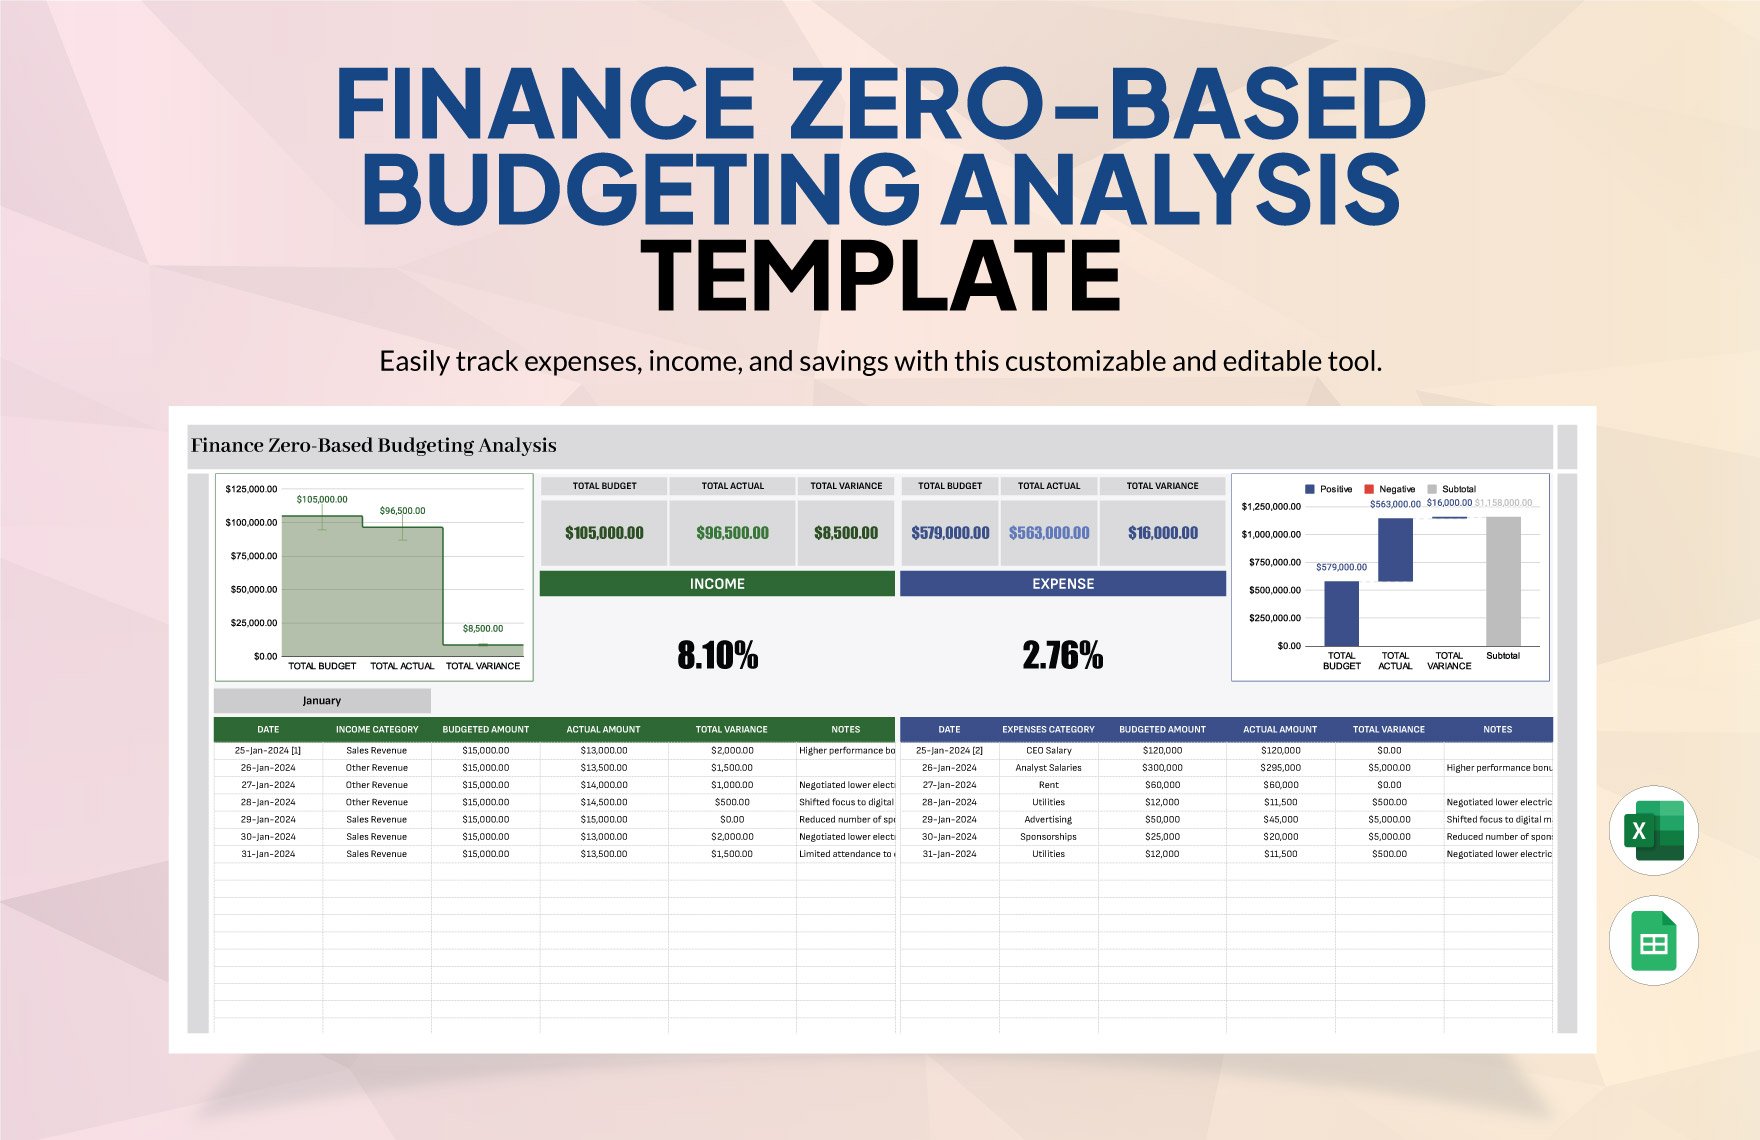 Finance Zero-Based Budgeting Analysis Template